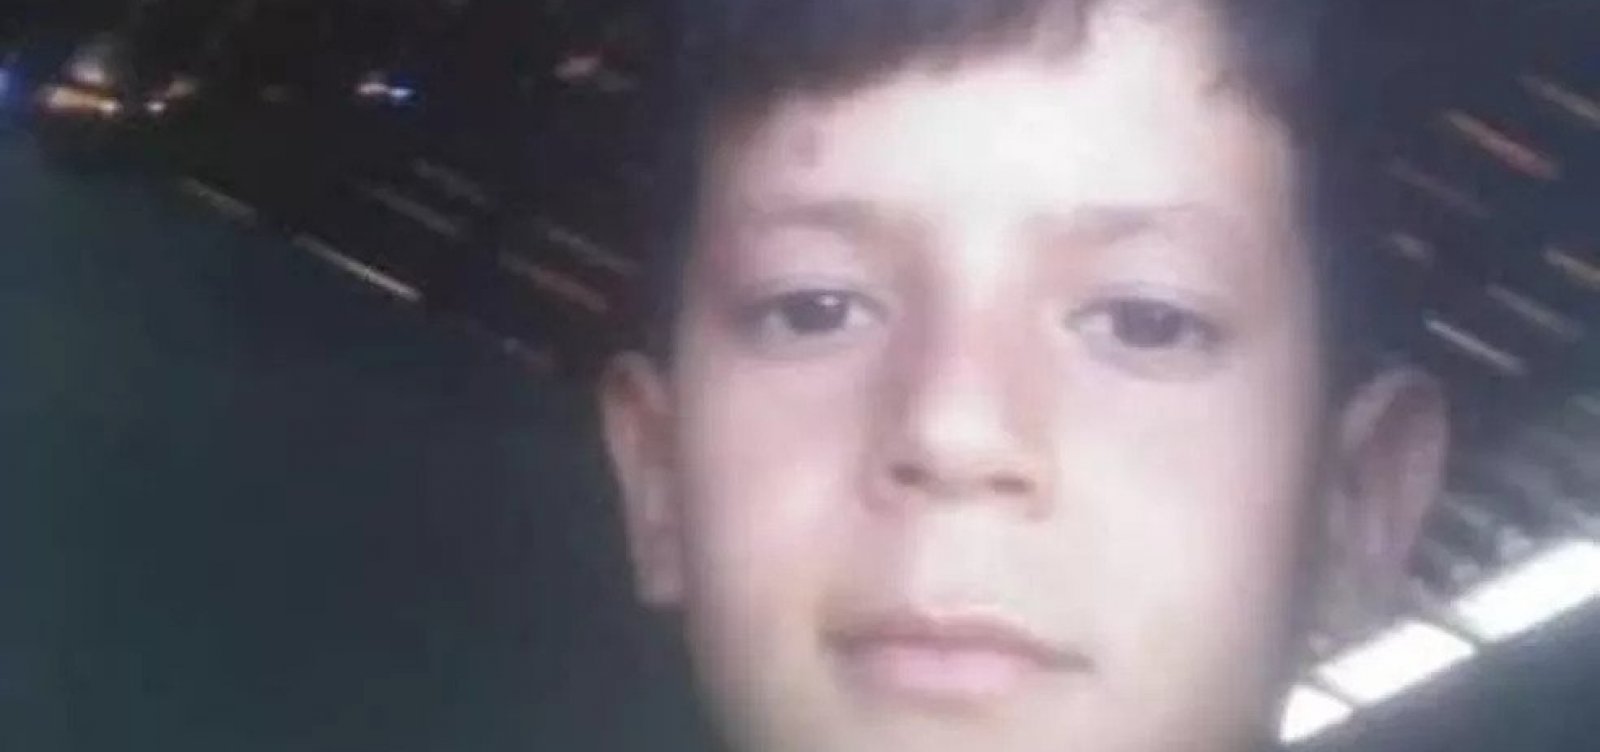 Menino de 8 anos mata irmã ao manusear arma do pai no norte da BA